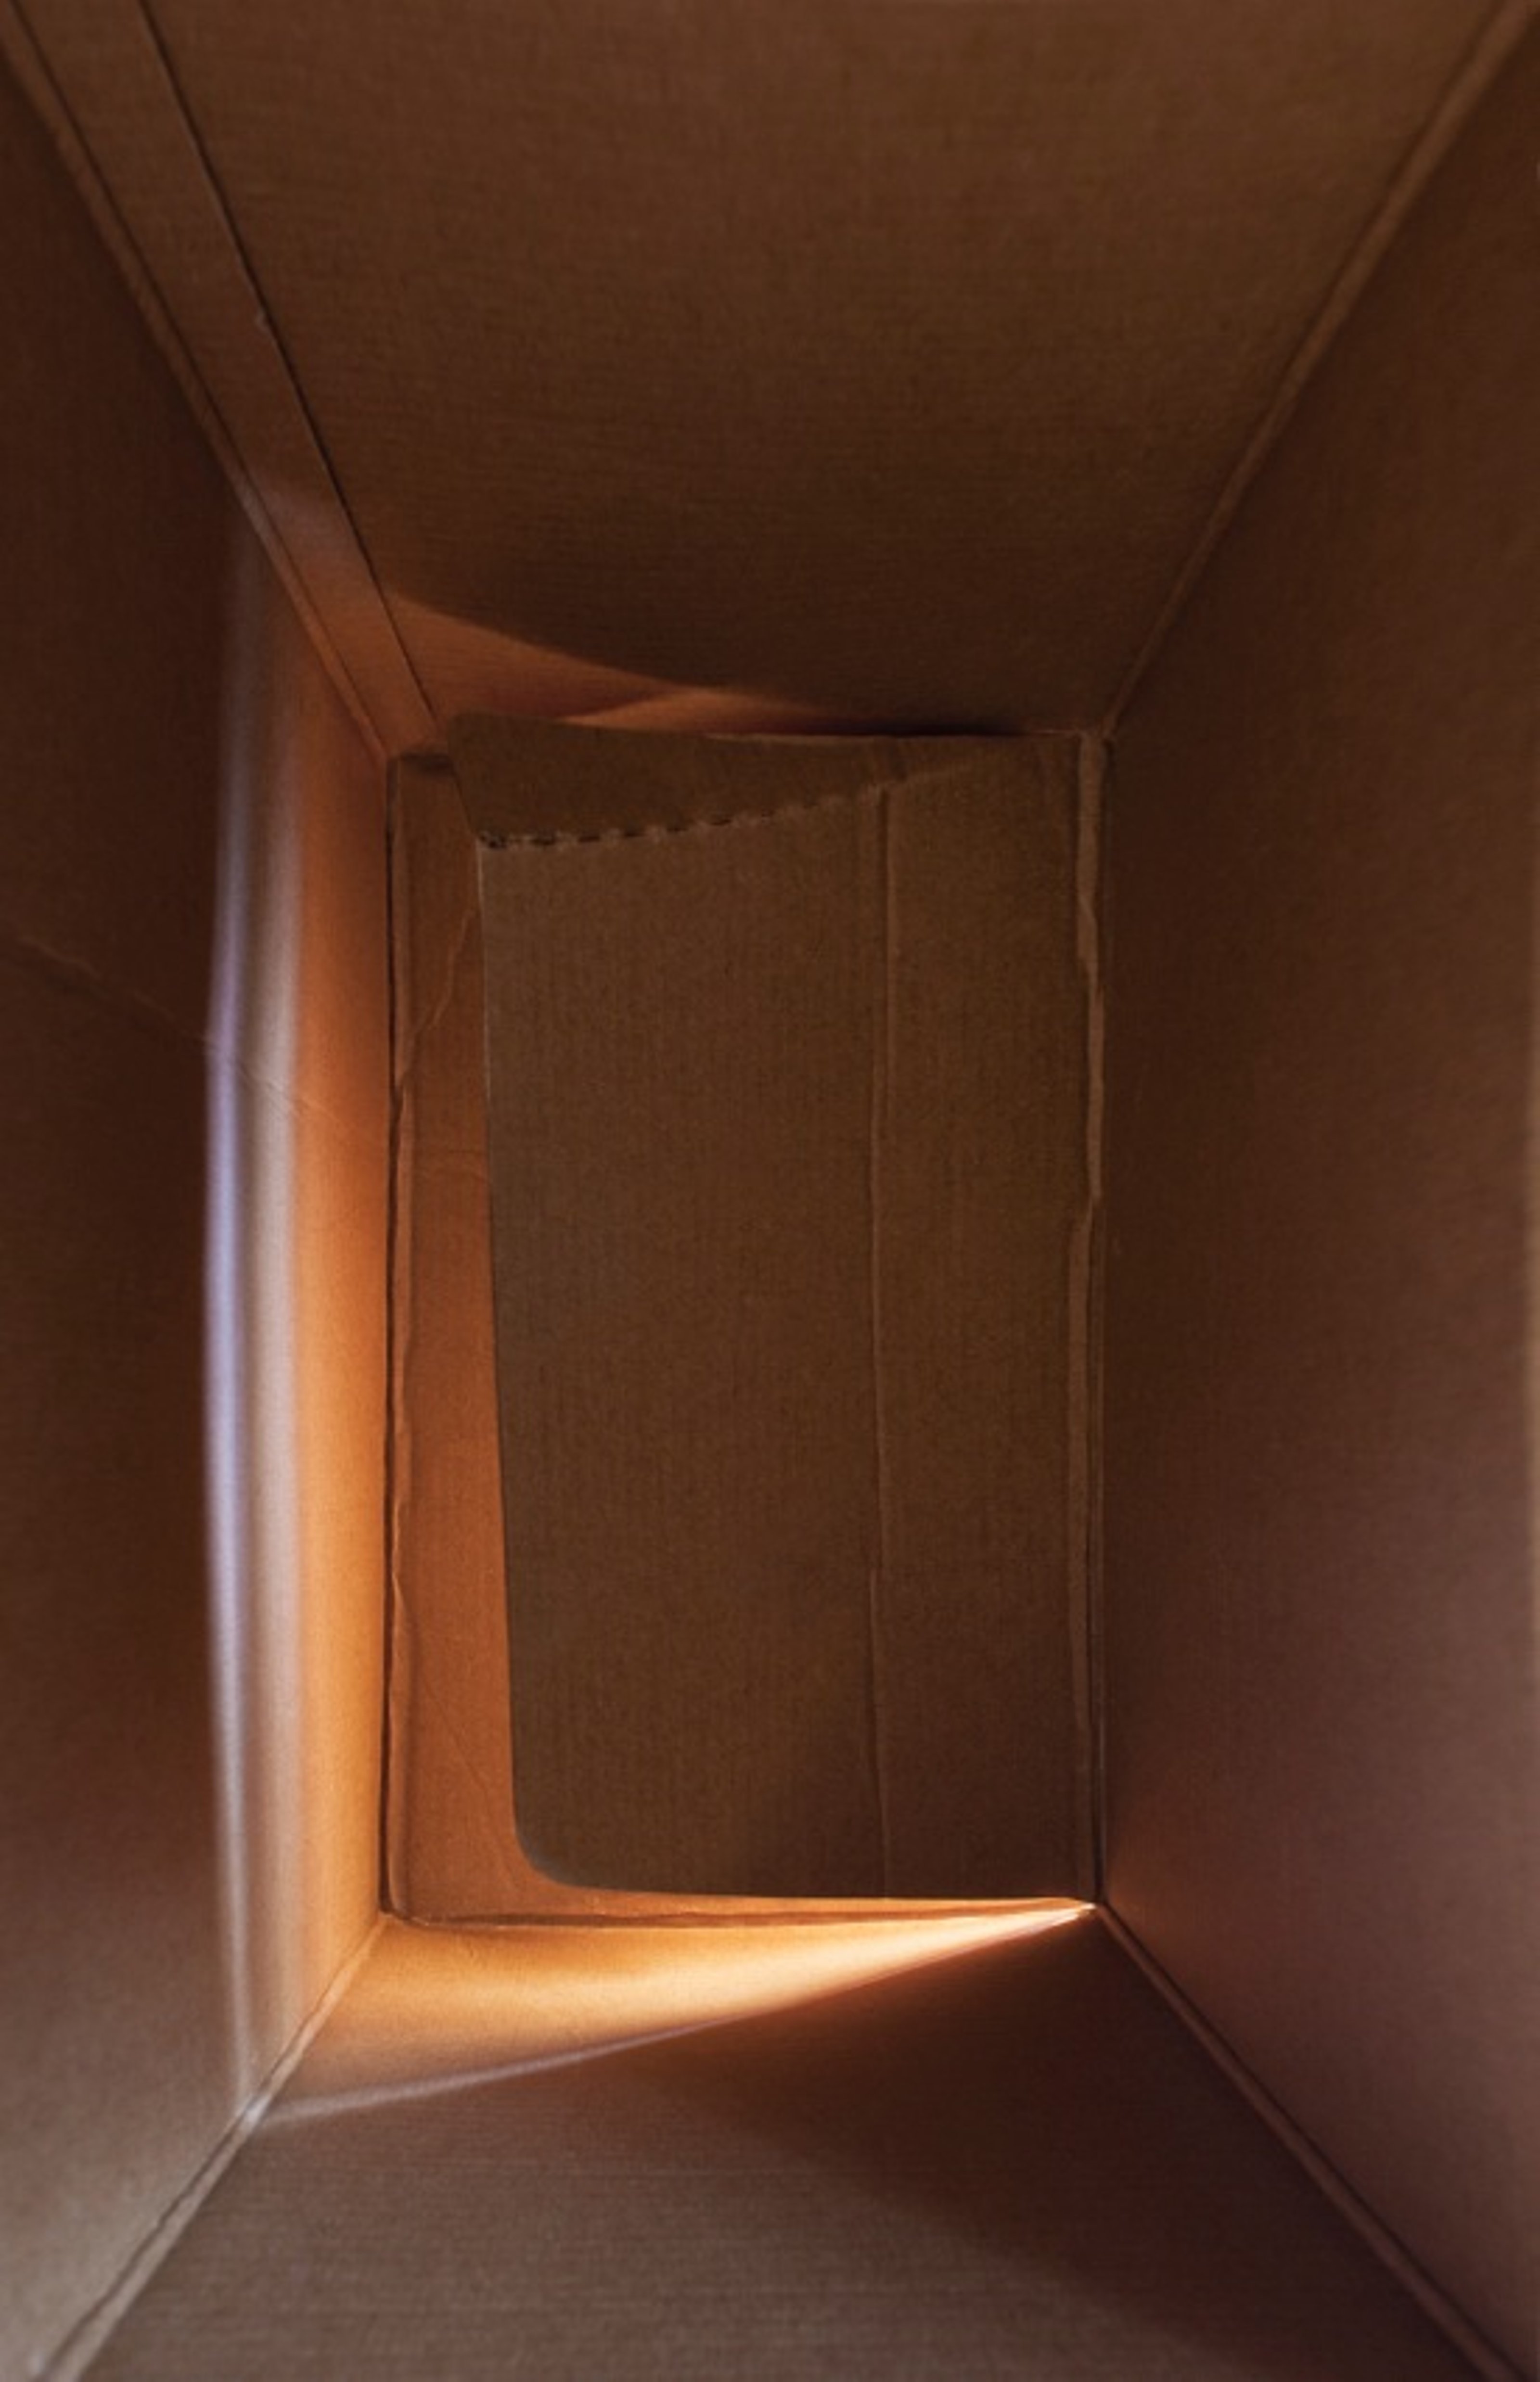 Interior of cardboard box